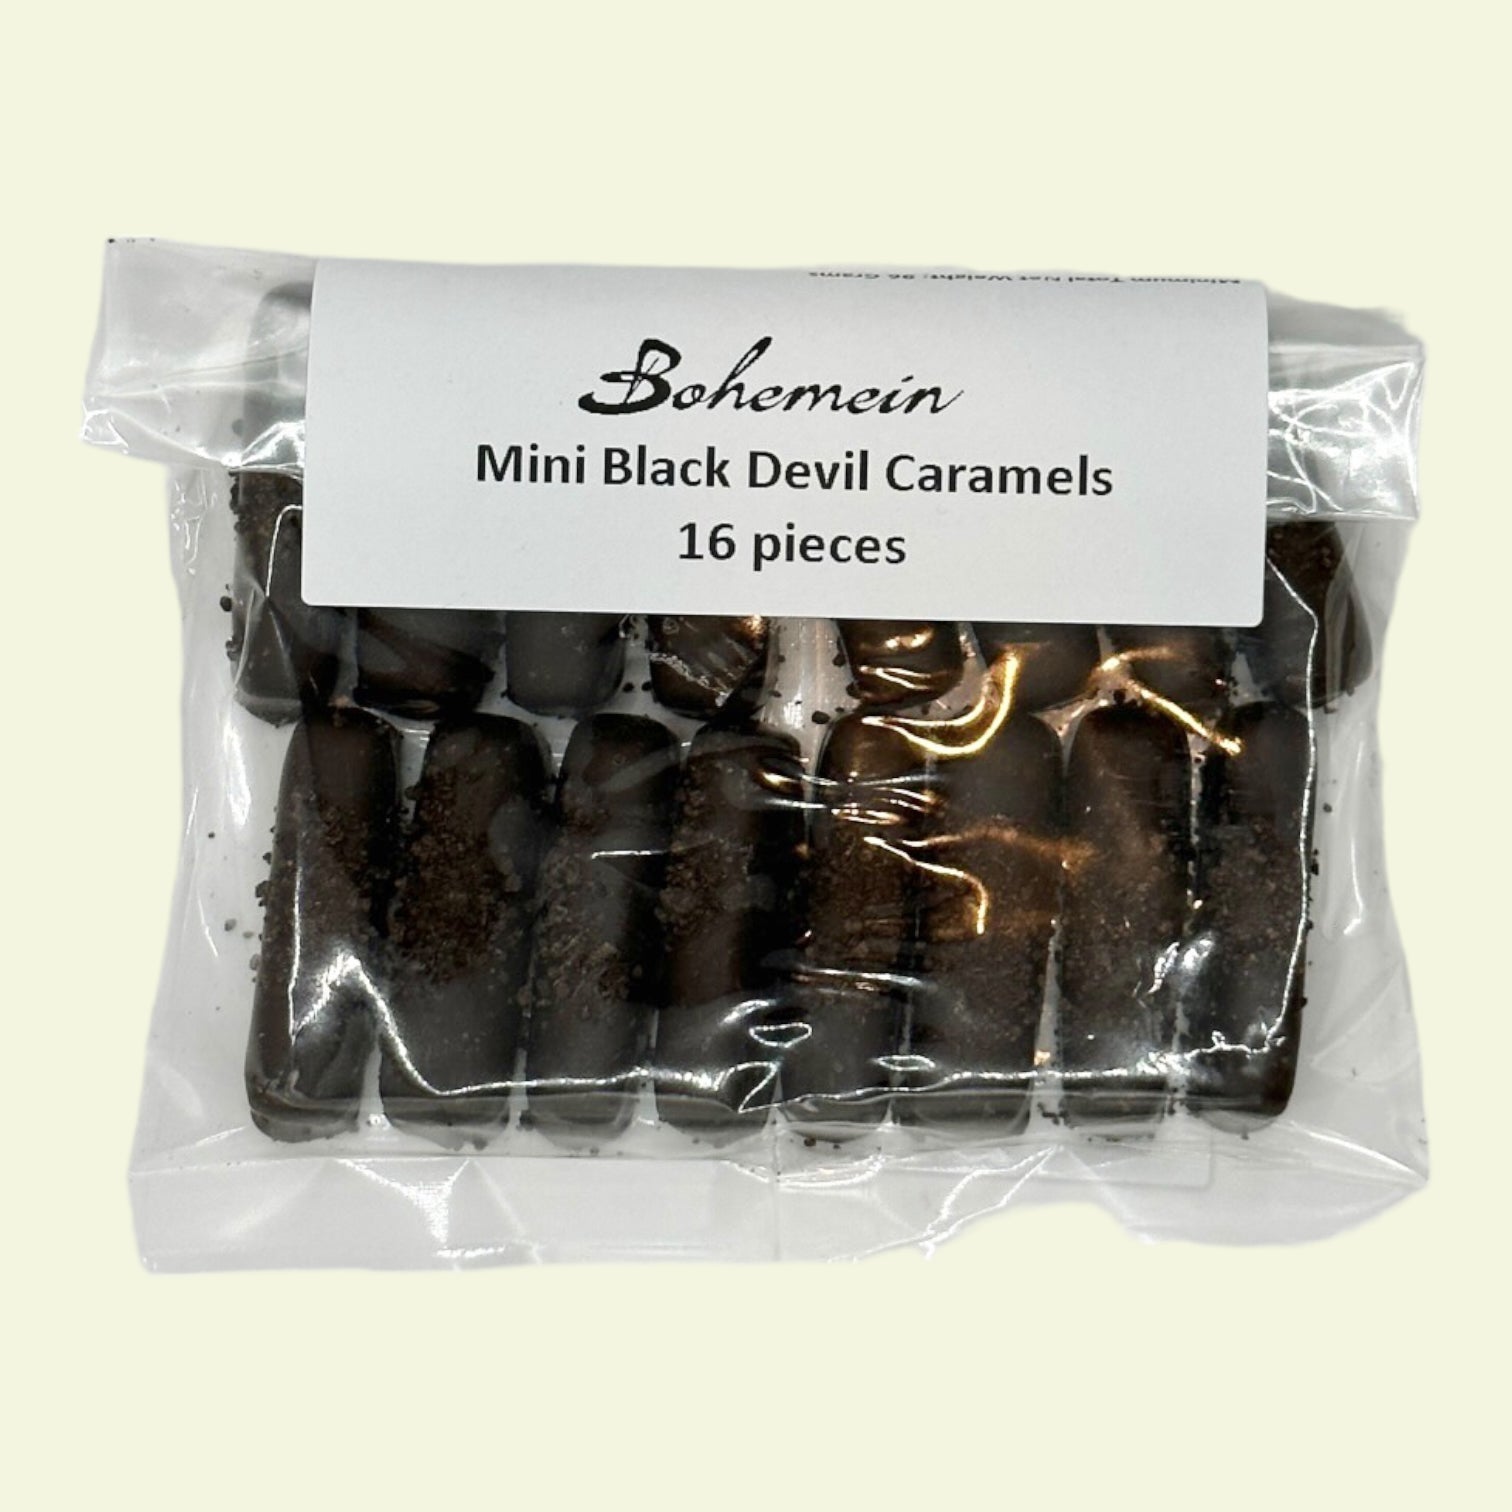 Bohemein Mini Black Devil Caramels